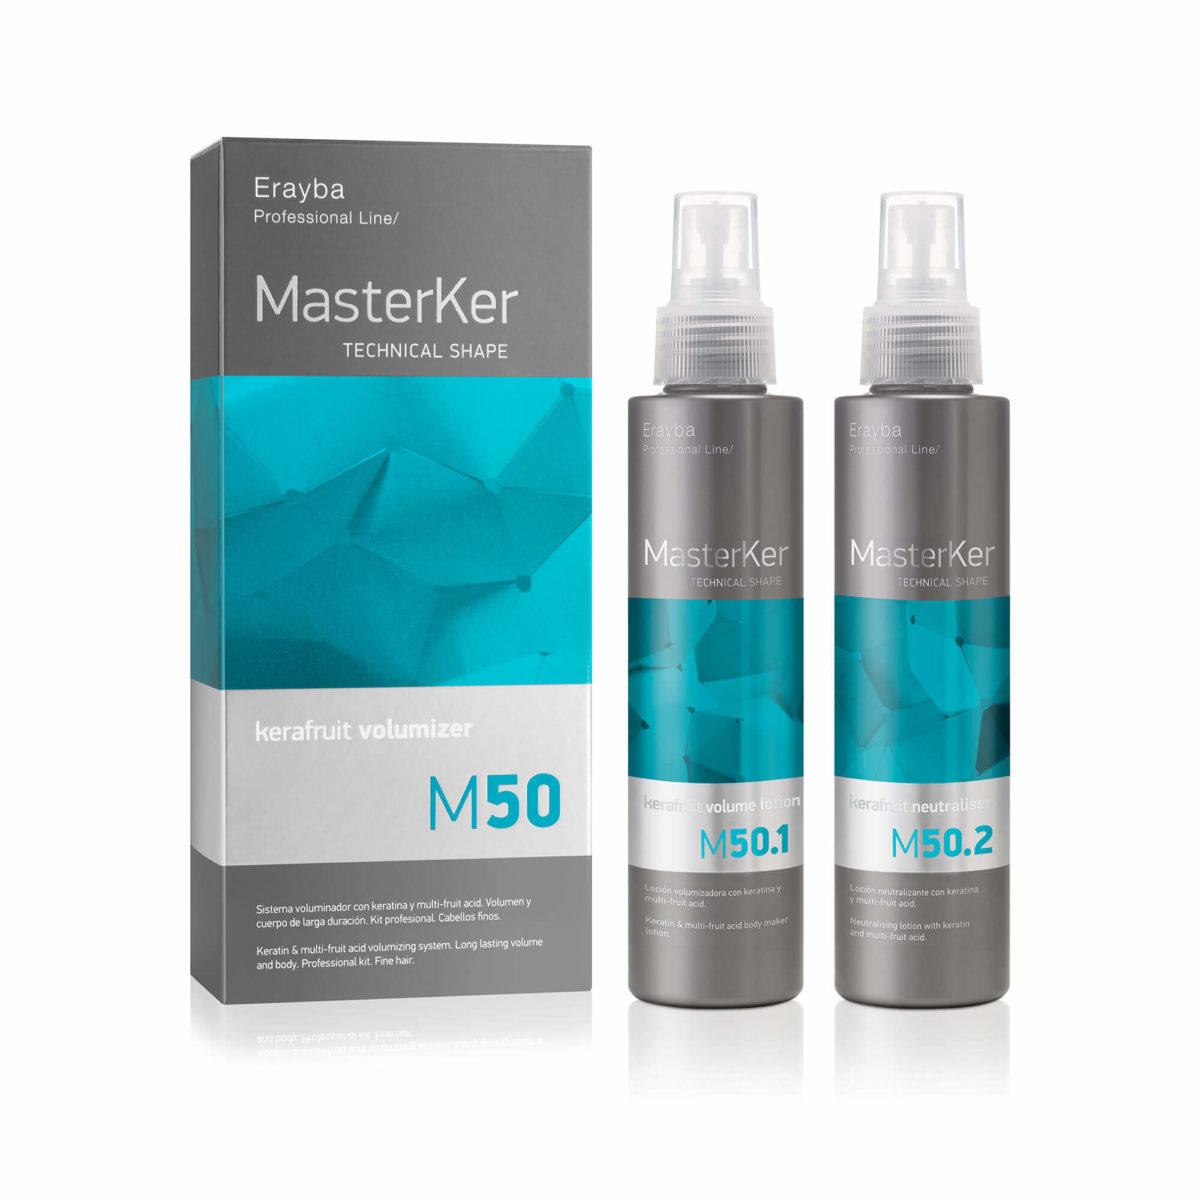 MasterKer M50 kerafruit volumizer